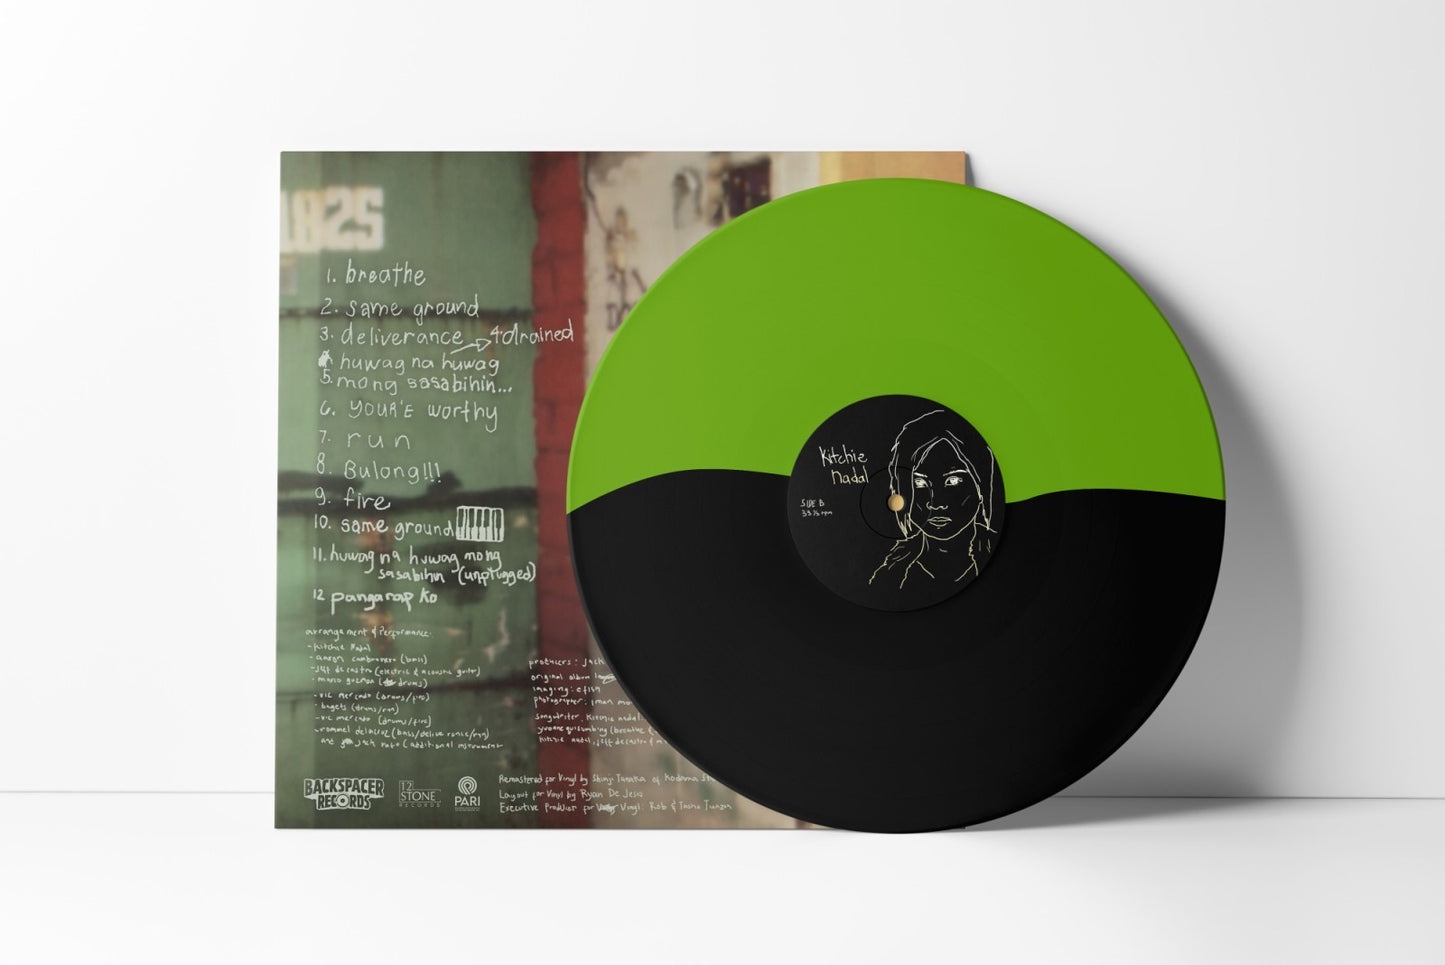 Kitchie Nadal - Kitchie Nadal (20th Anniversary) LP (Backspacer Records)